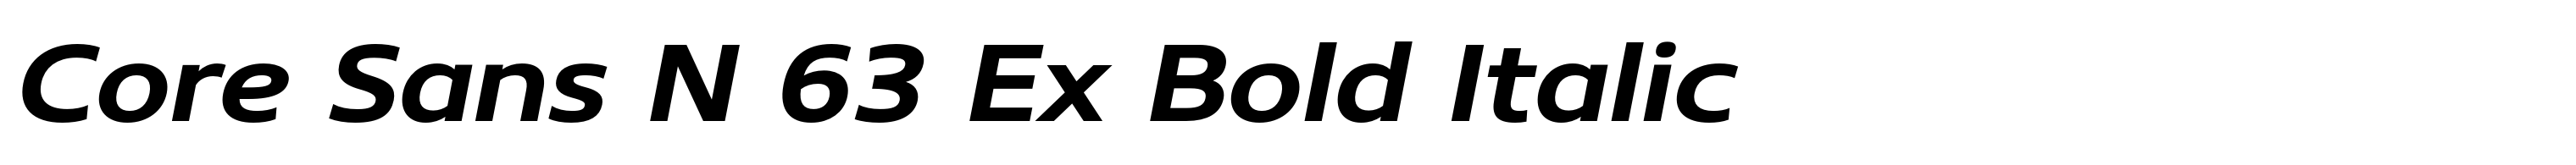 Core Sans N 63 Ex Bold Italic